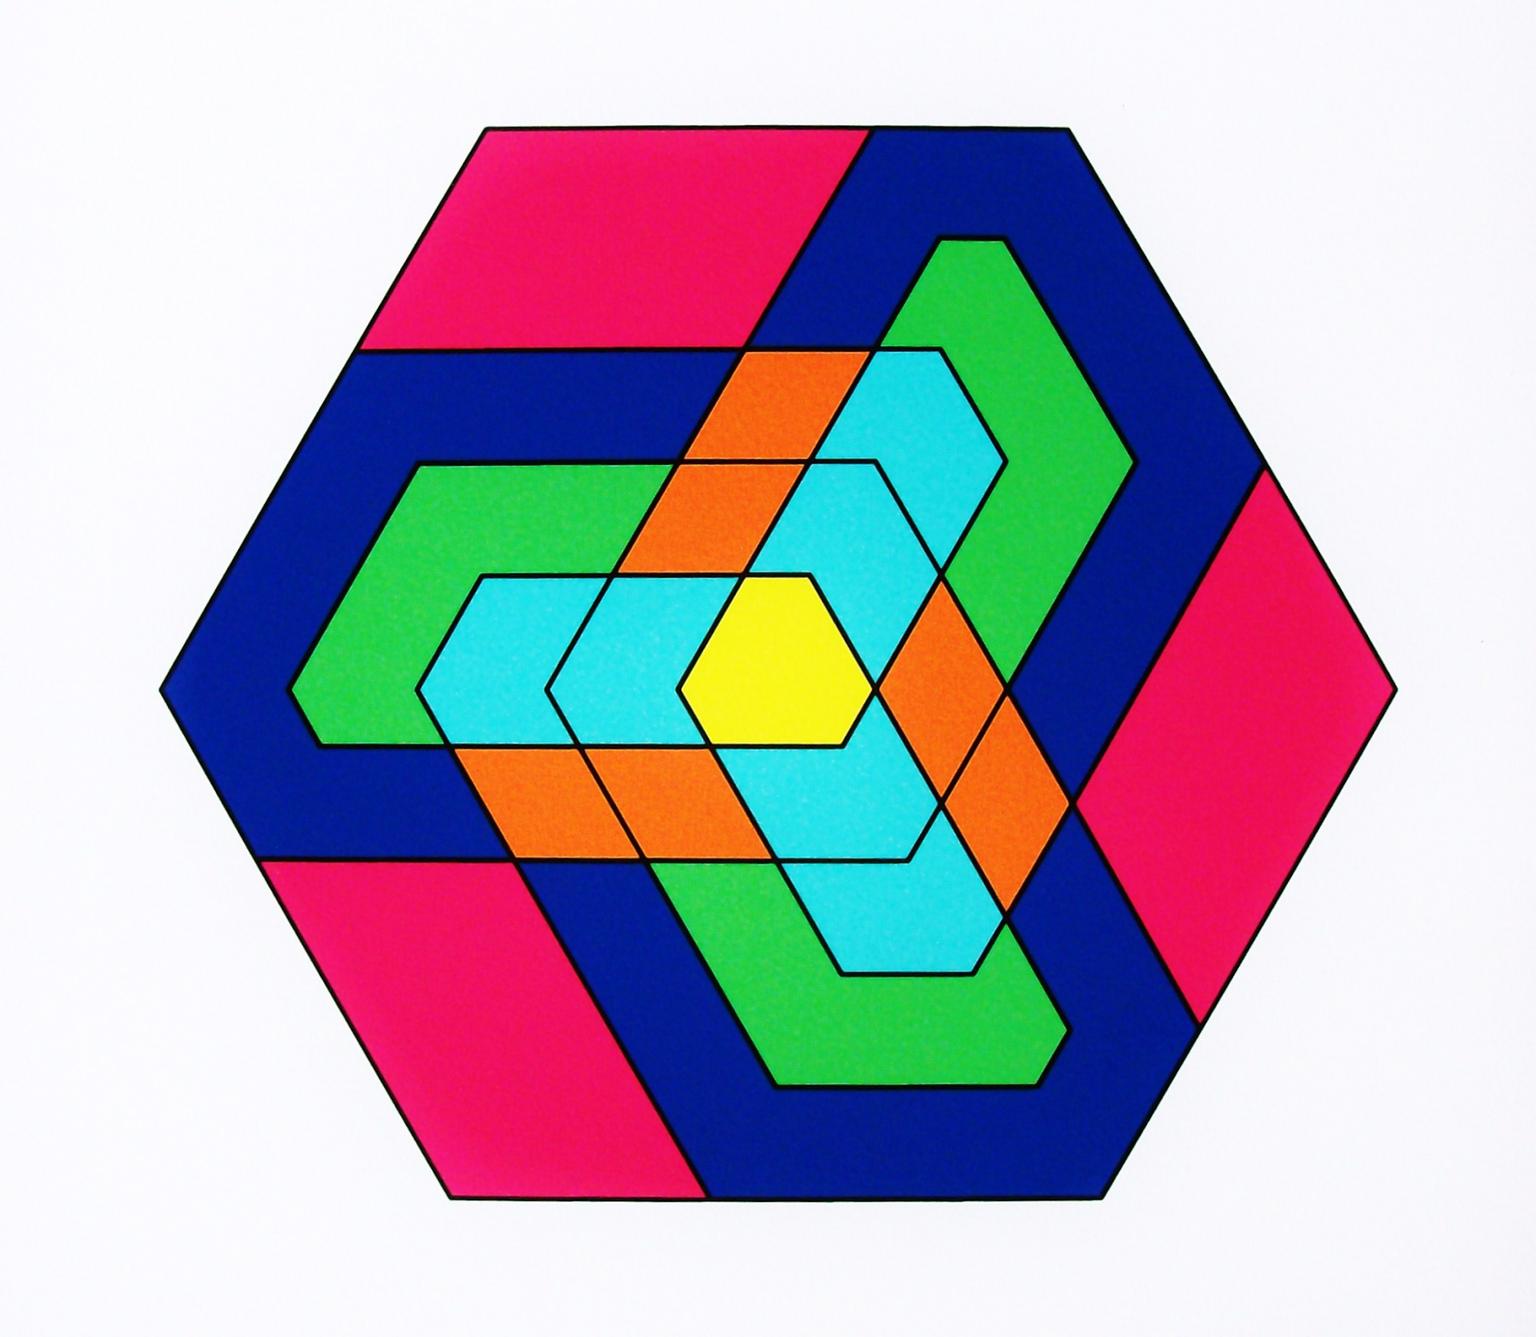 Image for entry '9 X 10 Irregular Hexagon'